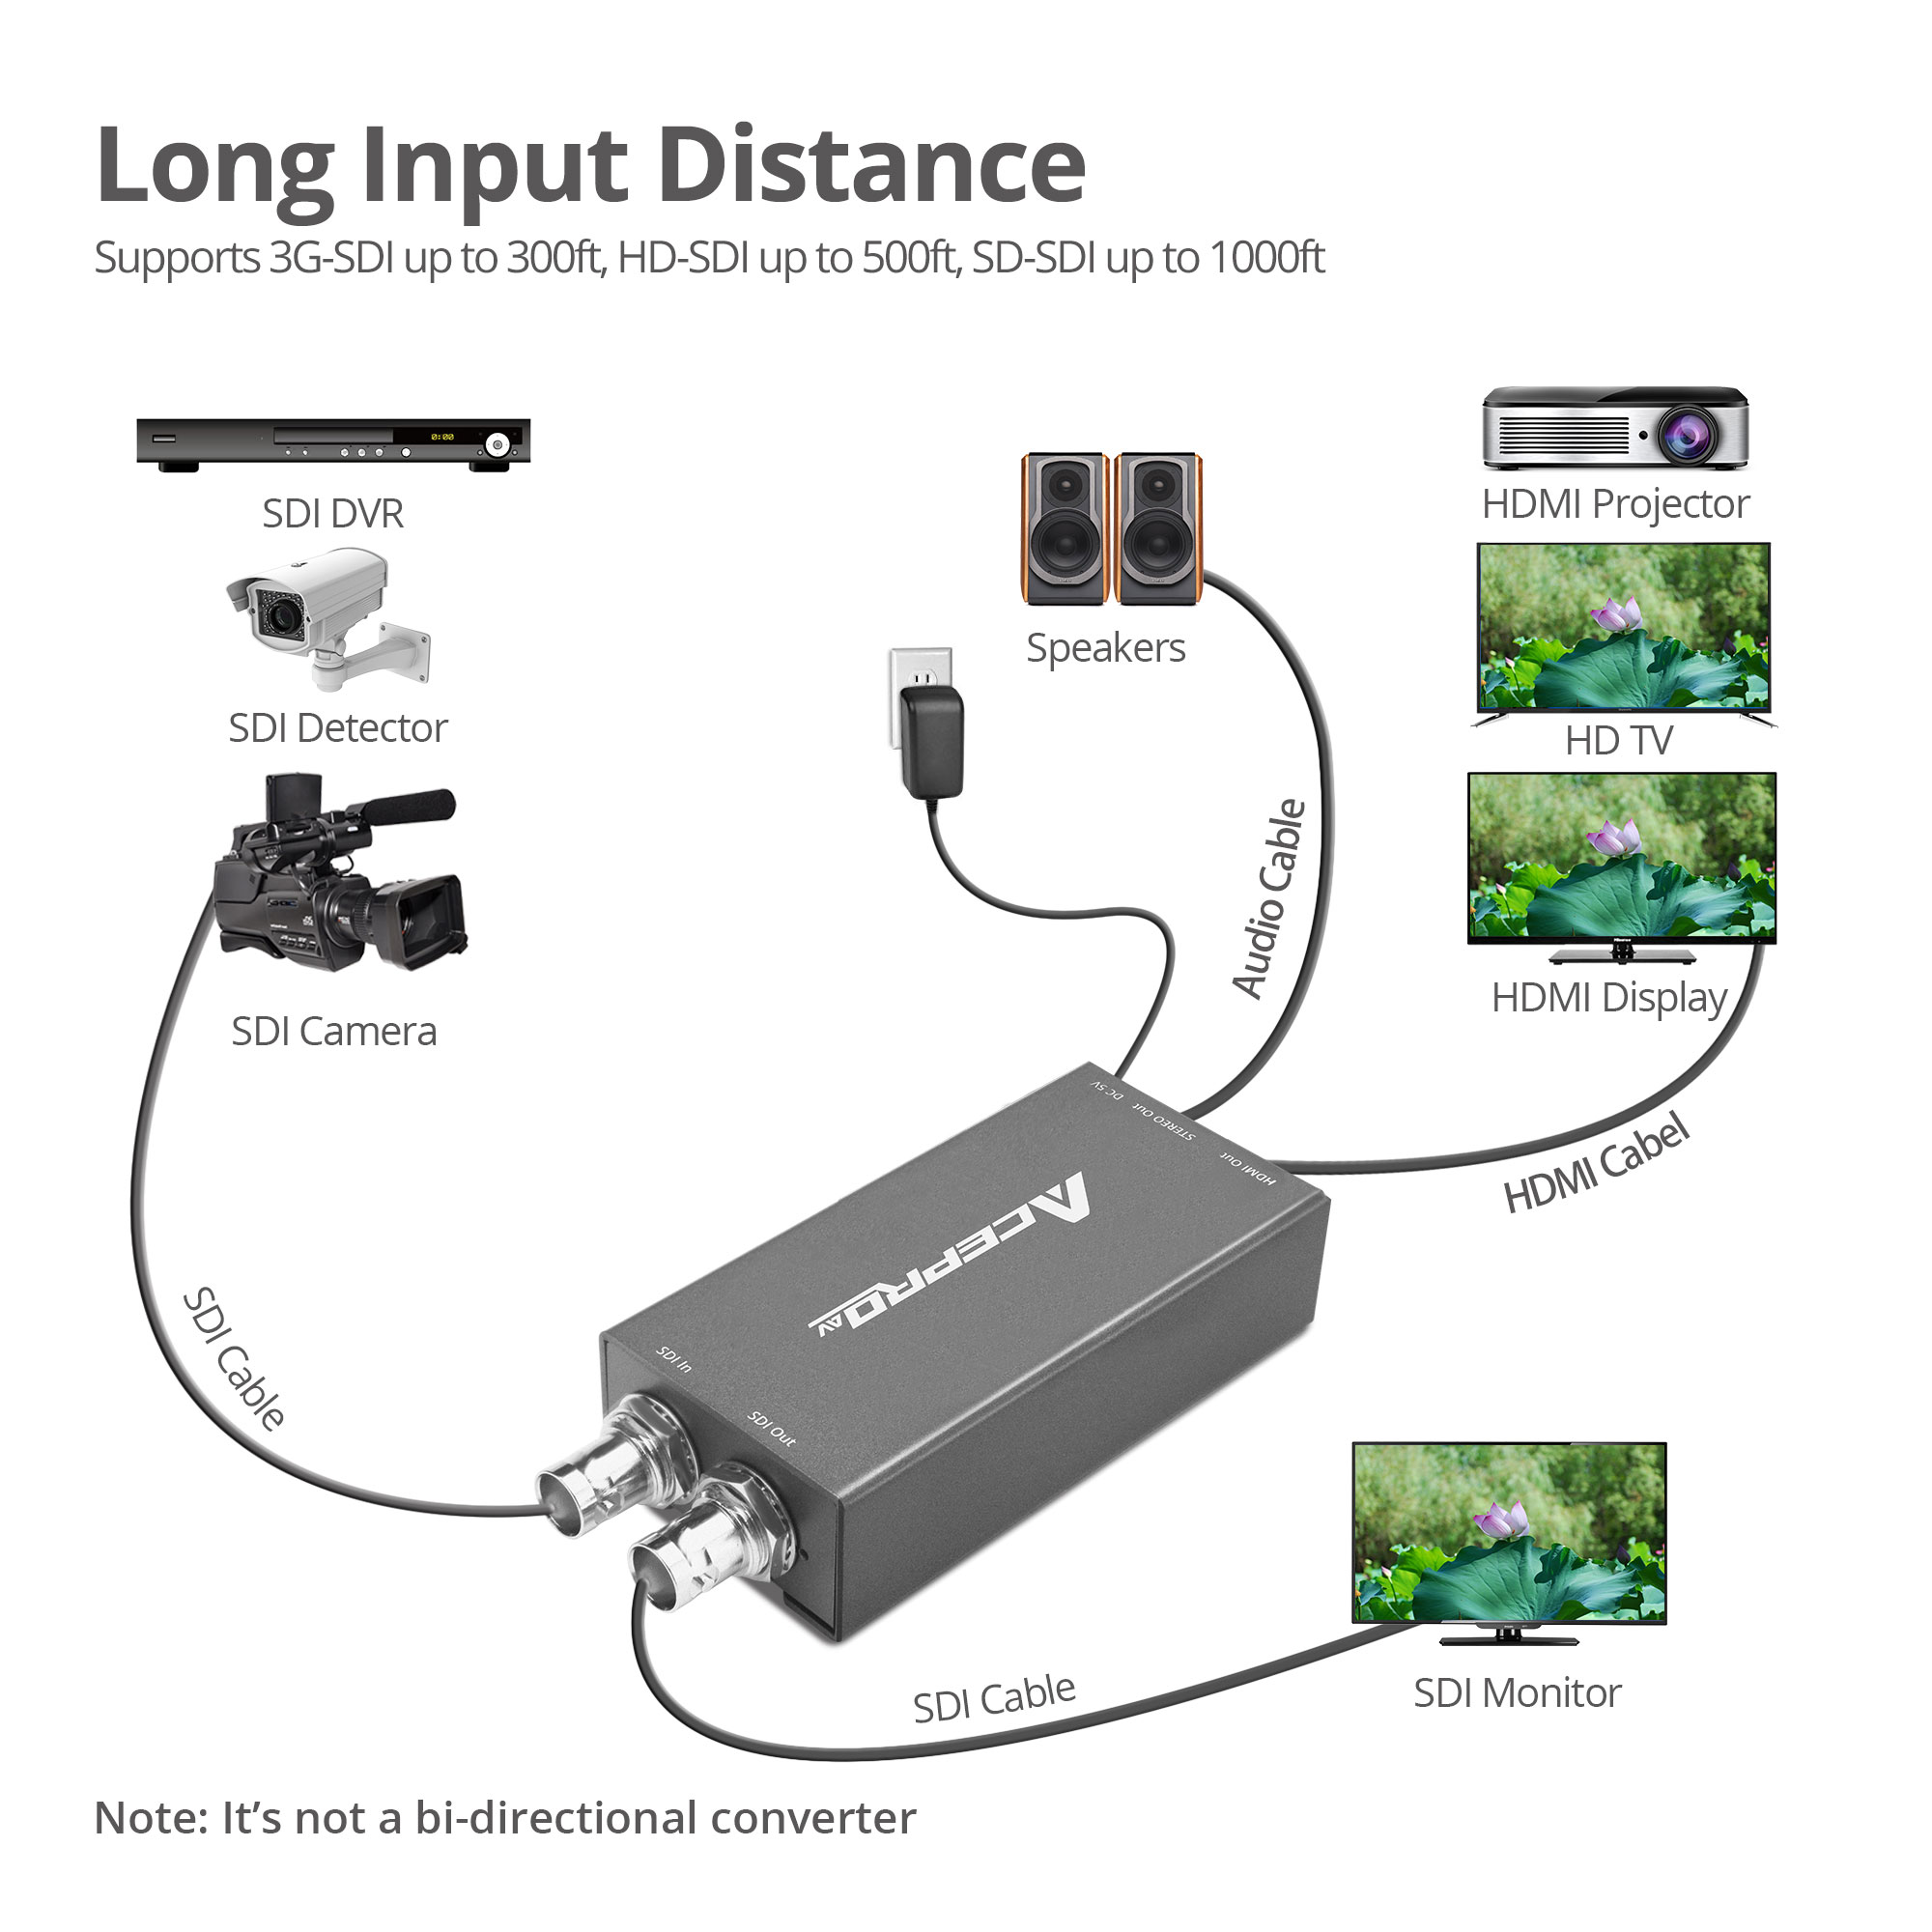 AcePro 3G/HD/SD-SDI to HDMI with Audio Extractor Mini Converter 